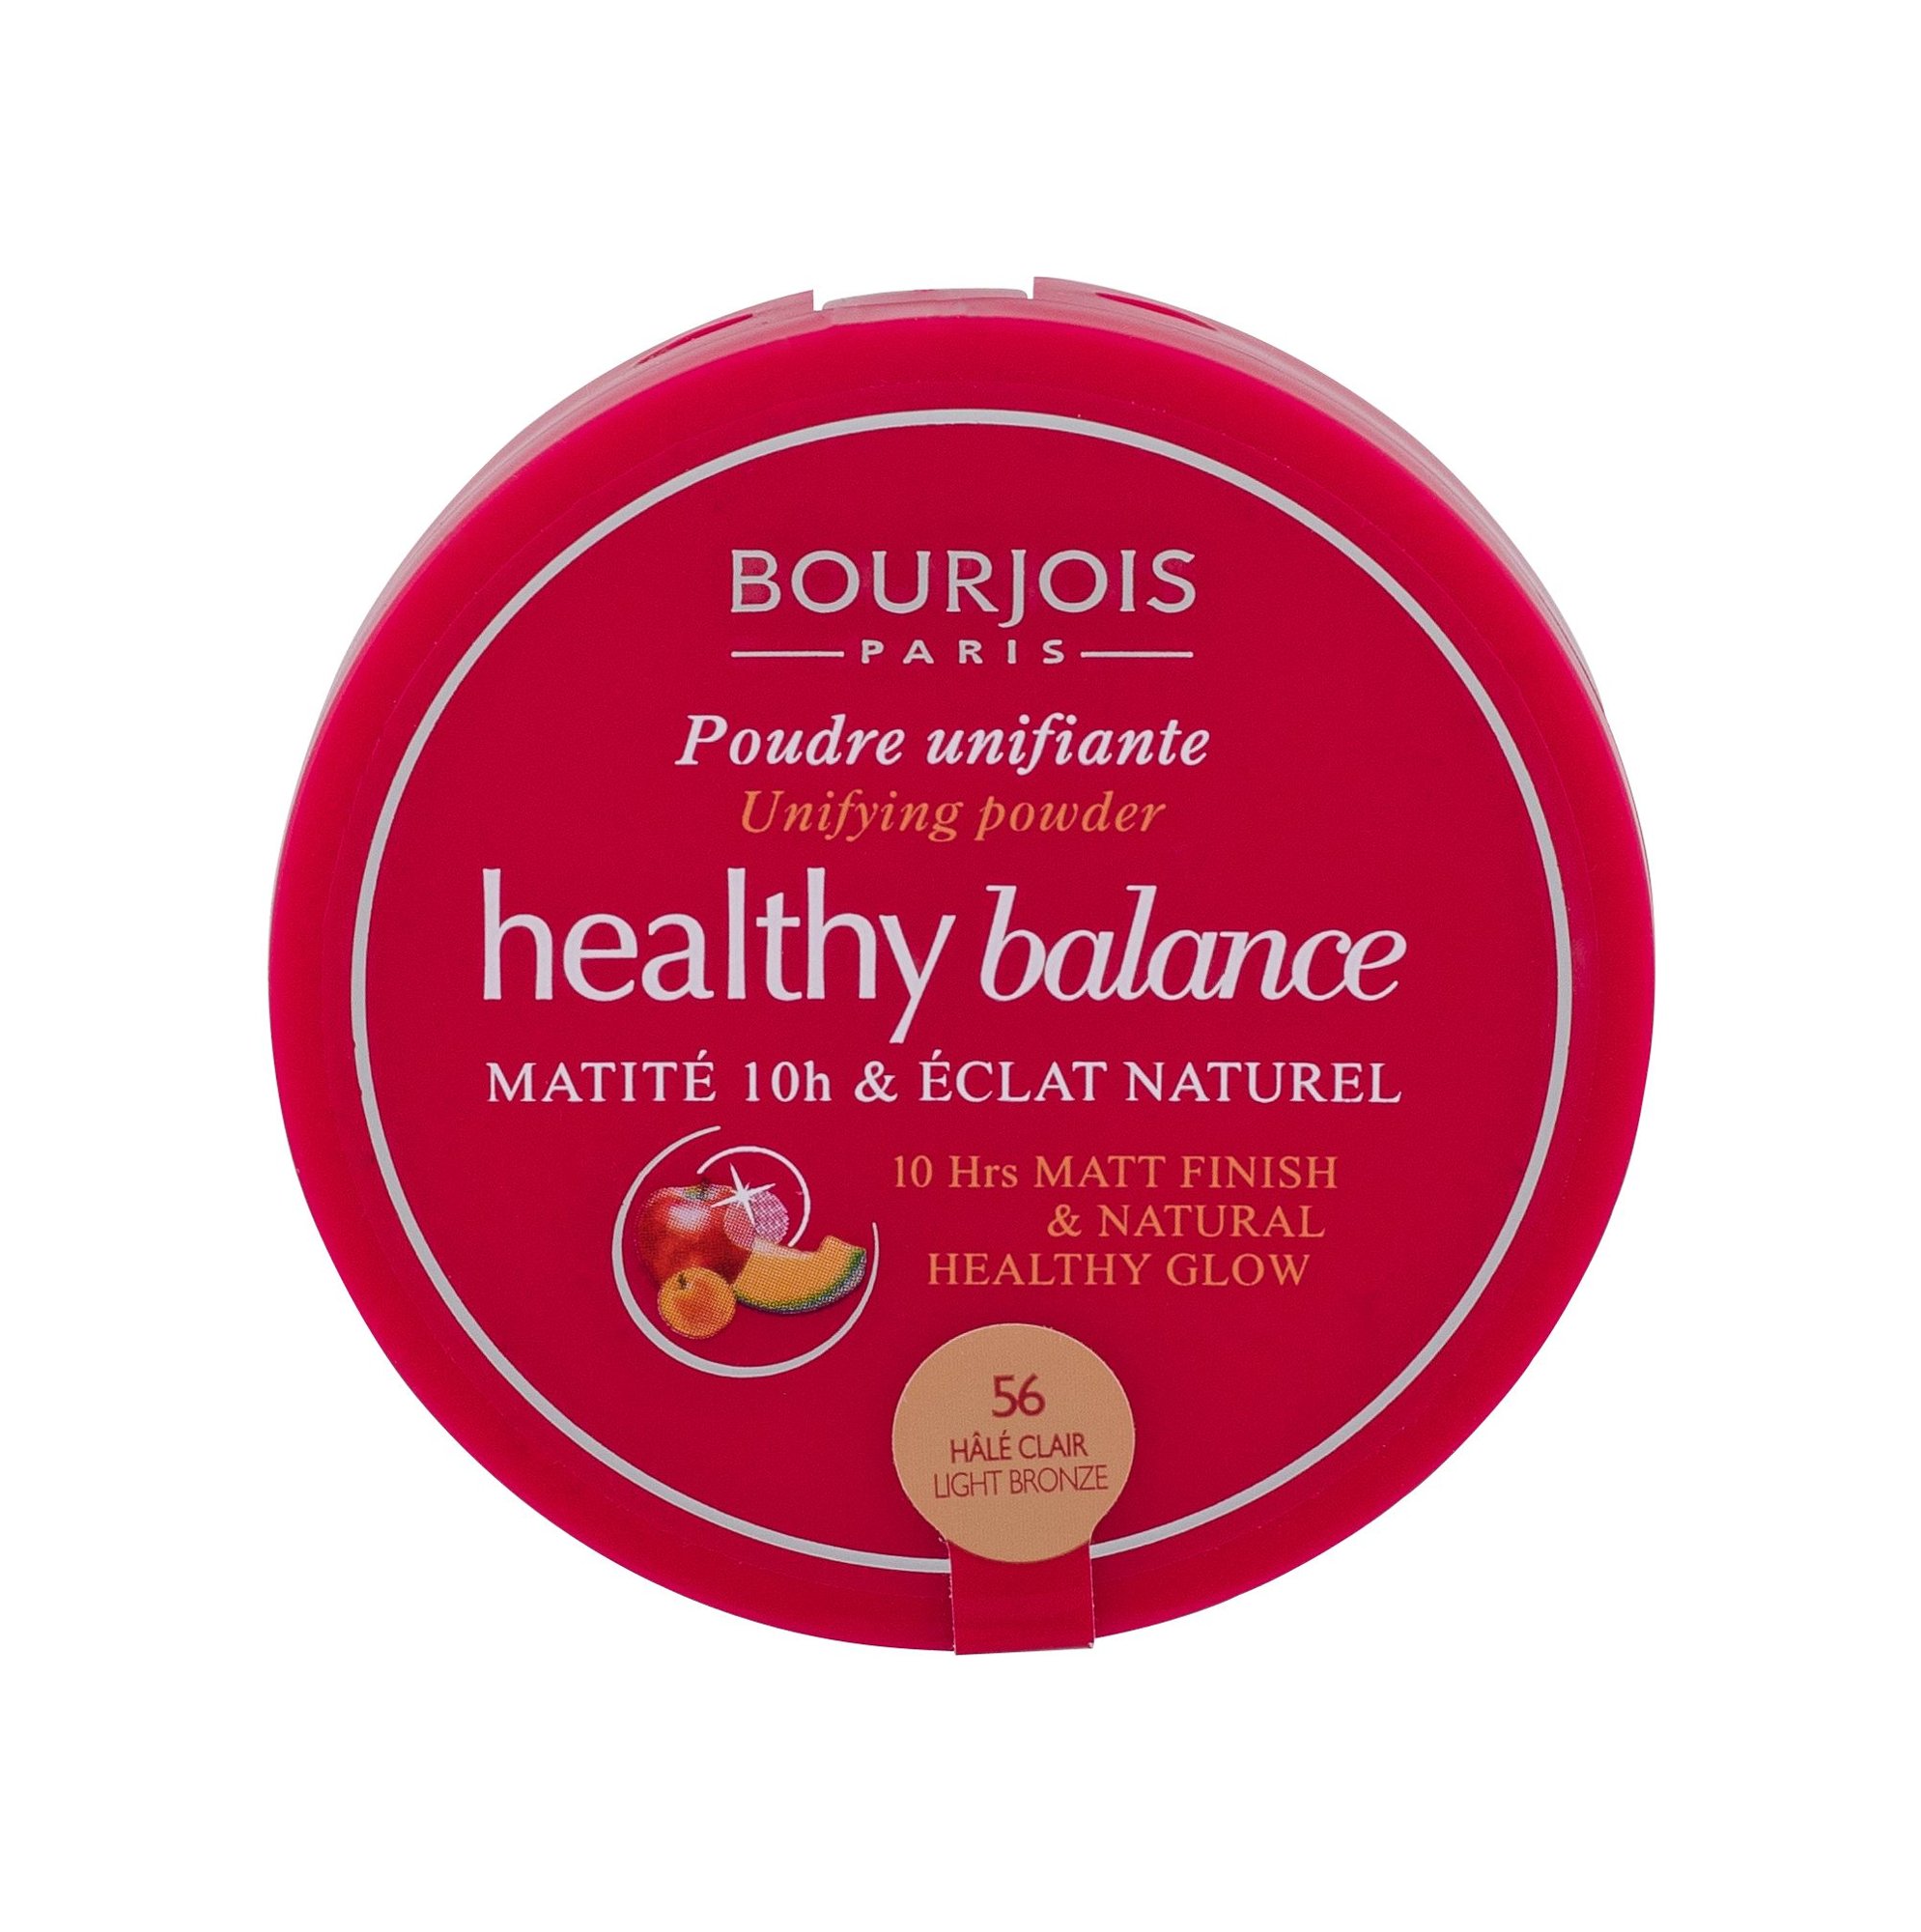 BOURJOIS Paris Healthy Balance sausa pudra